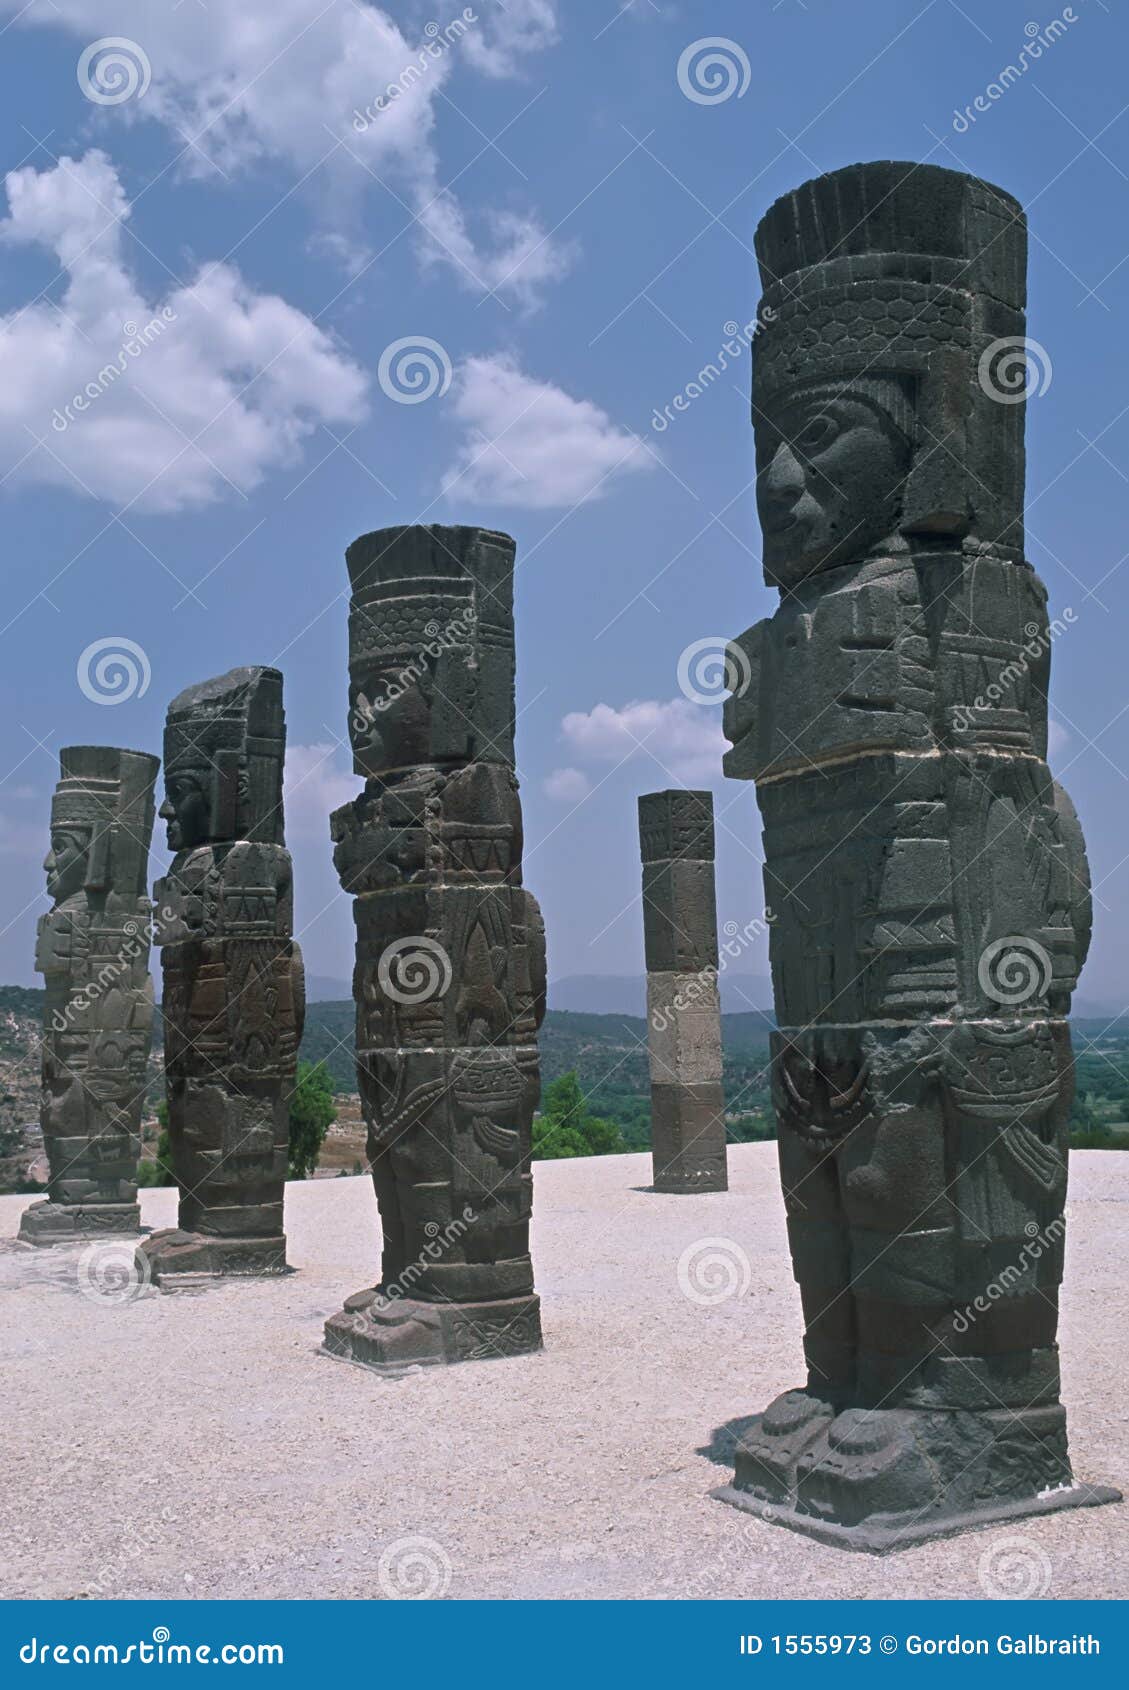 giant stone sculptures